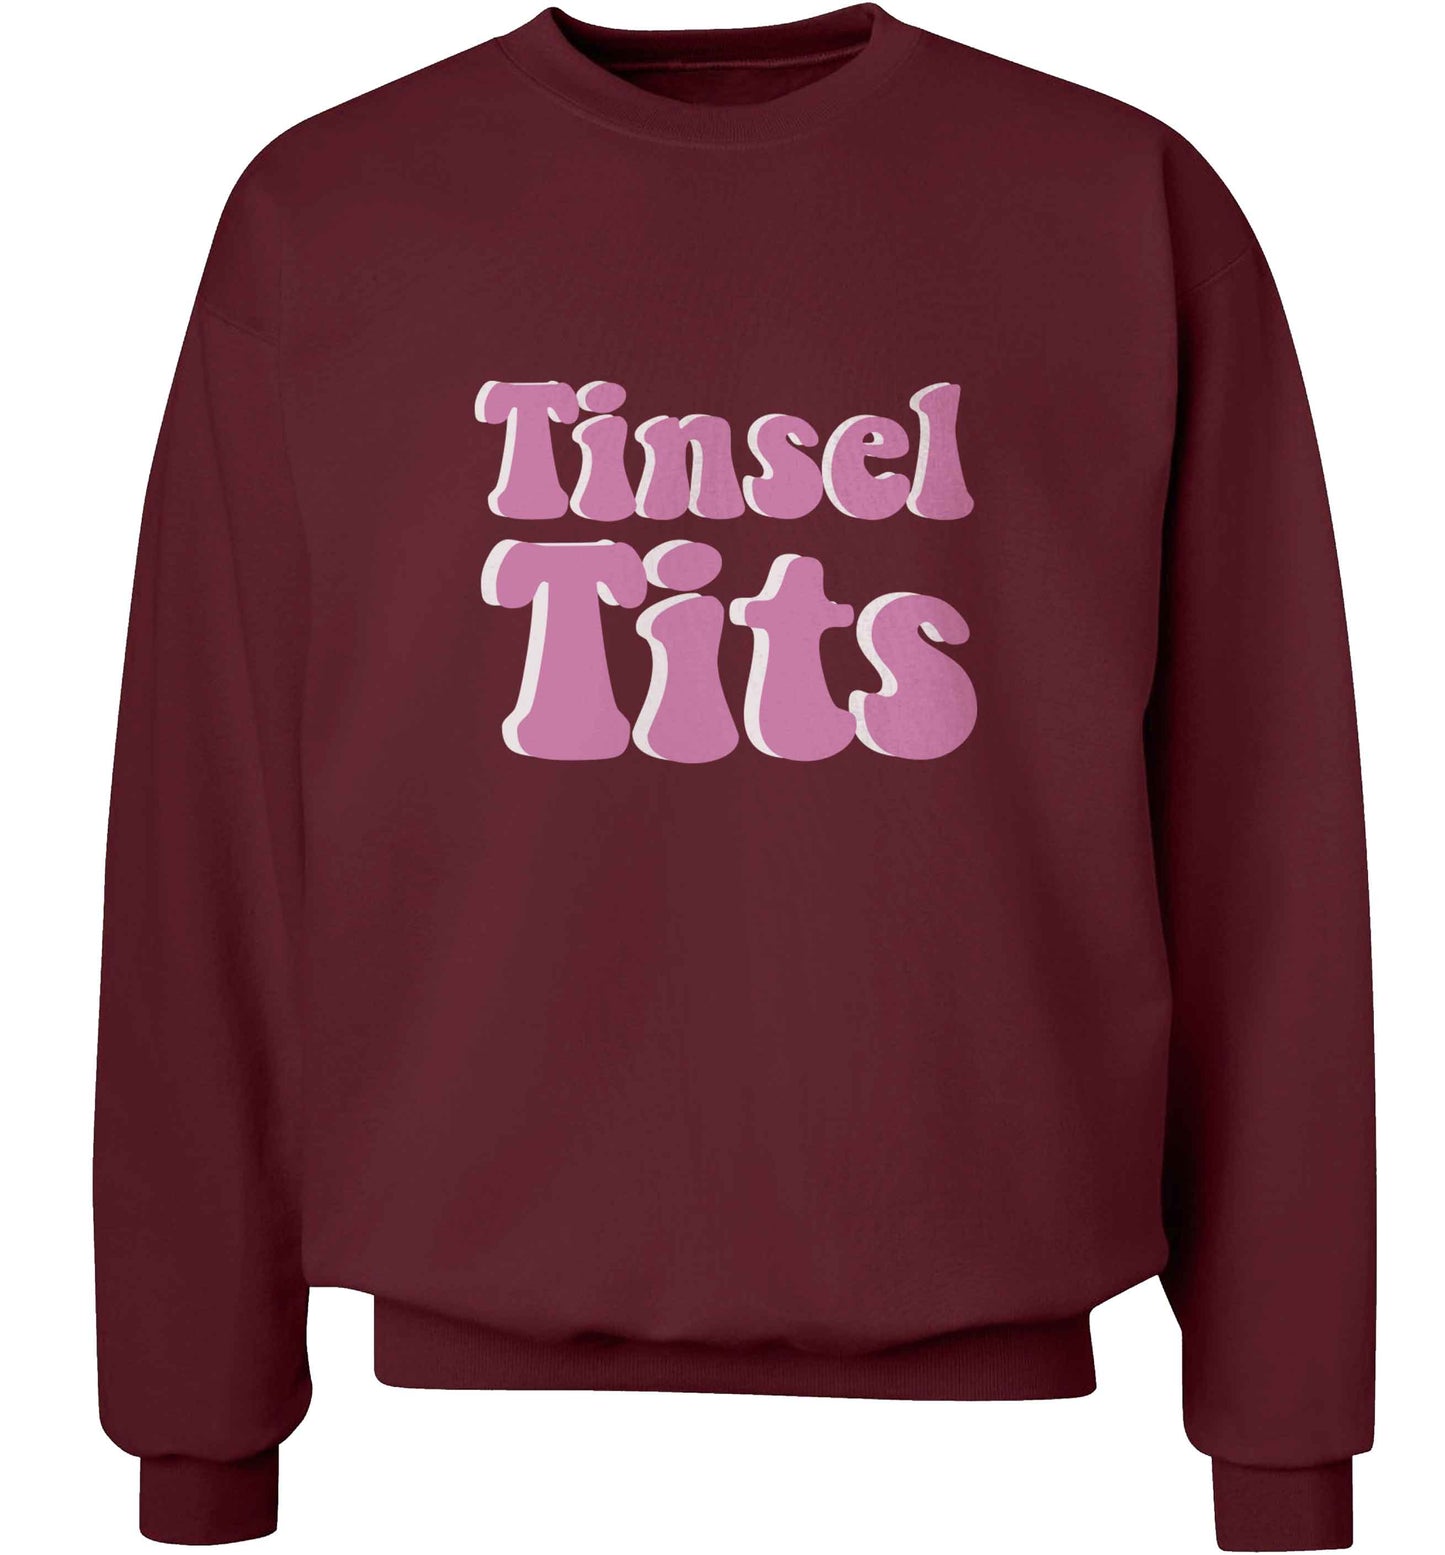 Tinsel tits adult's unisex maroon sweater 2XL